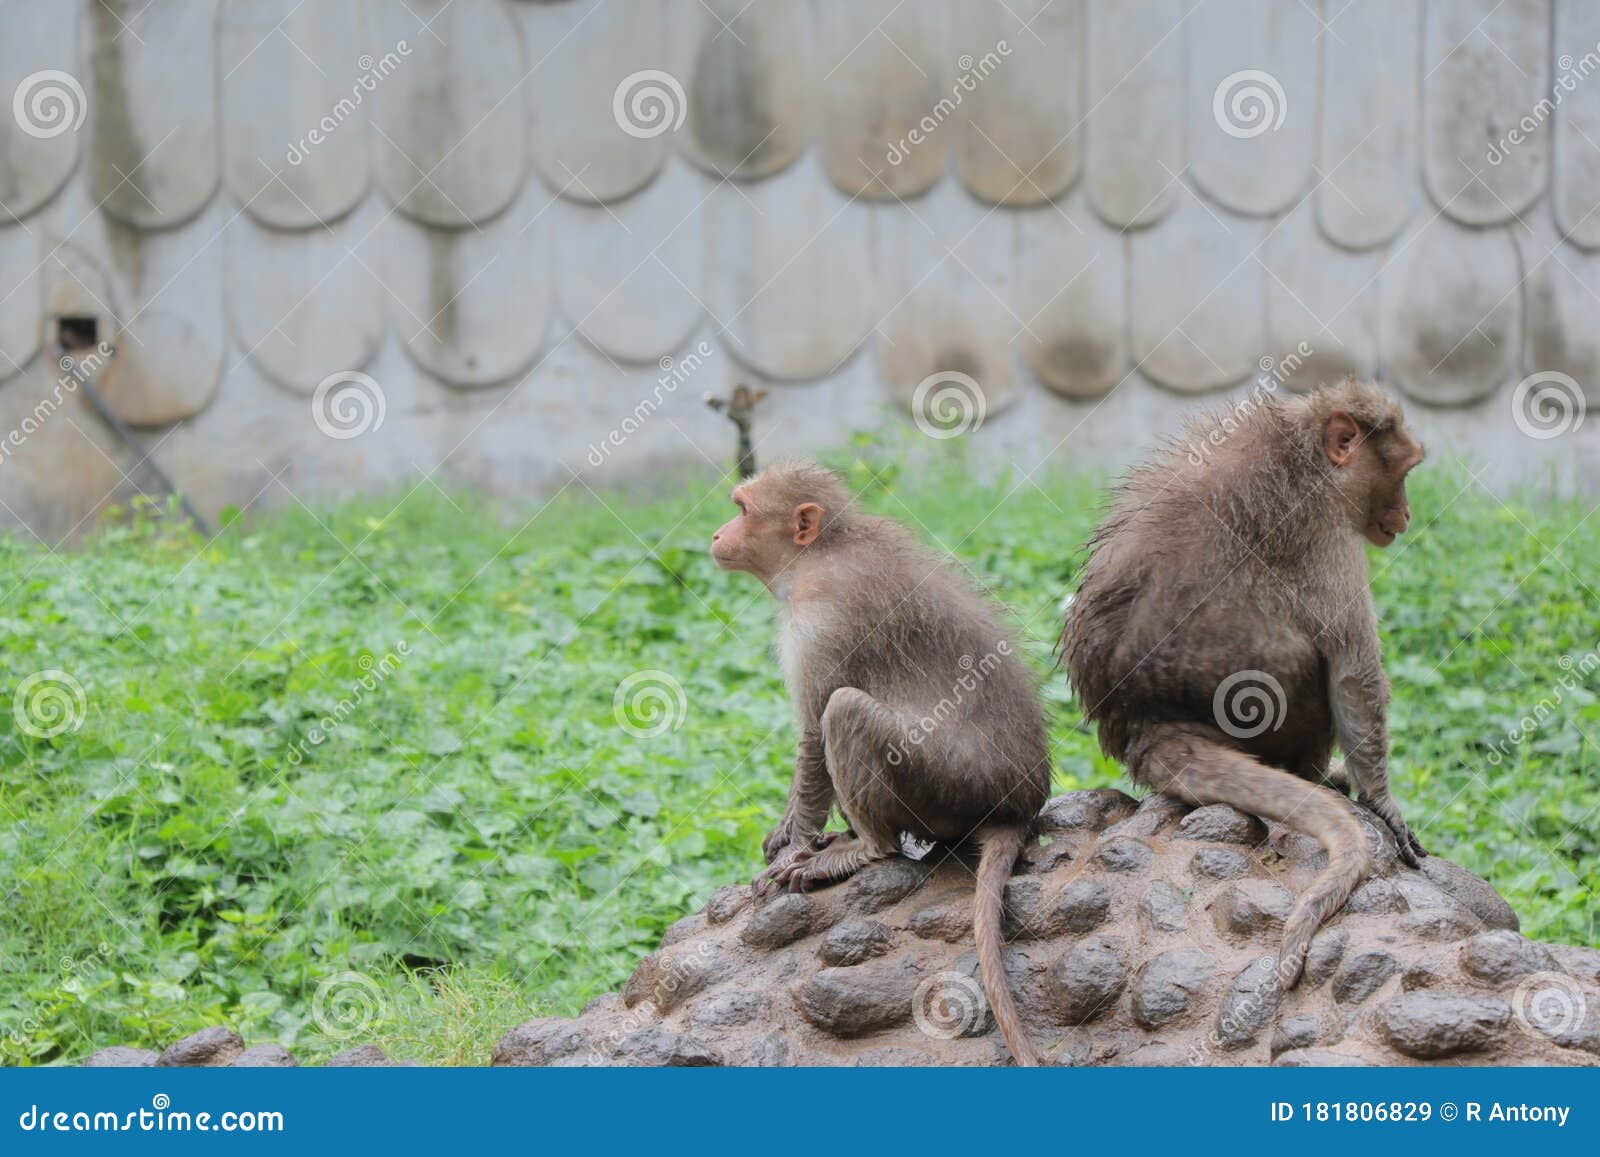 two monkeys in a zoo, gwalior, madhyapradesh, india